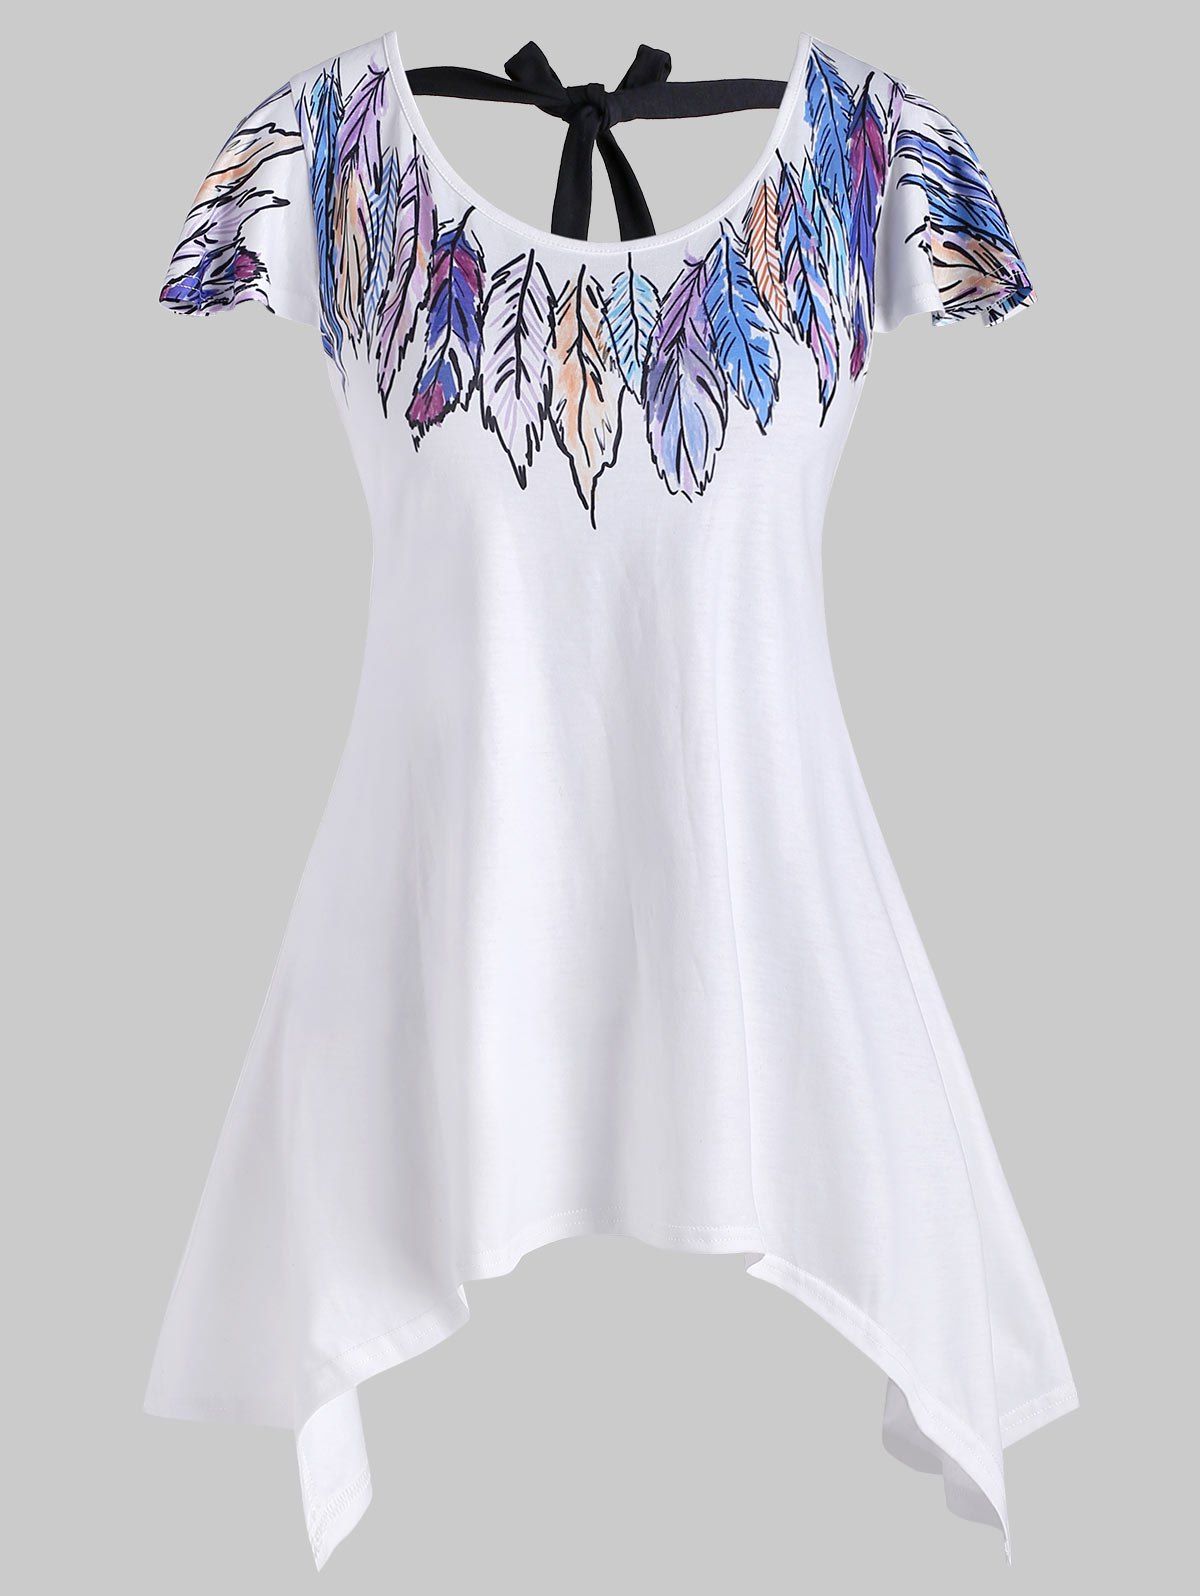 Feather Printed Asymmetrical T-shirt - WHITE S